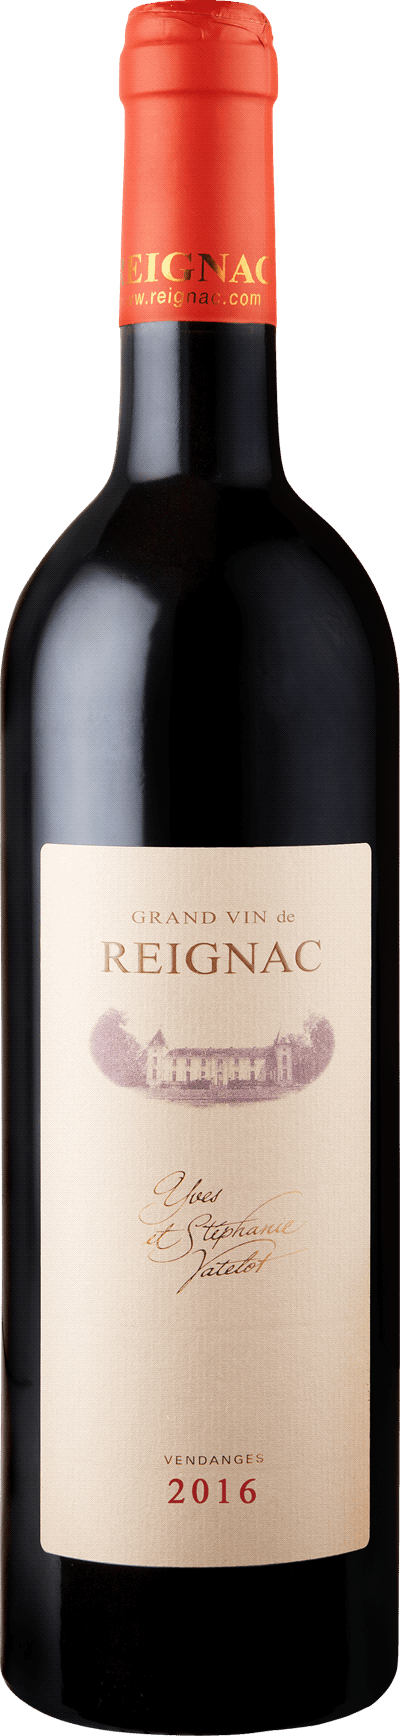 Grand Vin de Reignac 